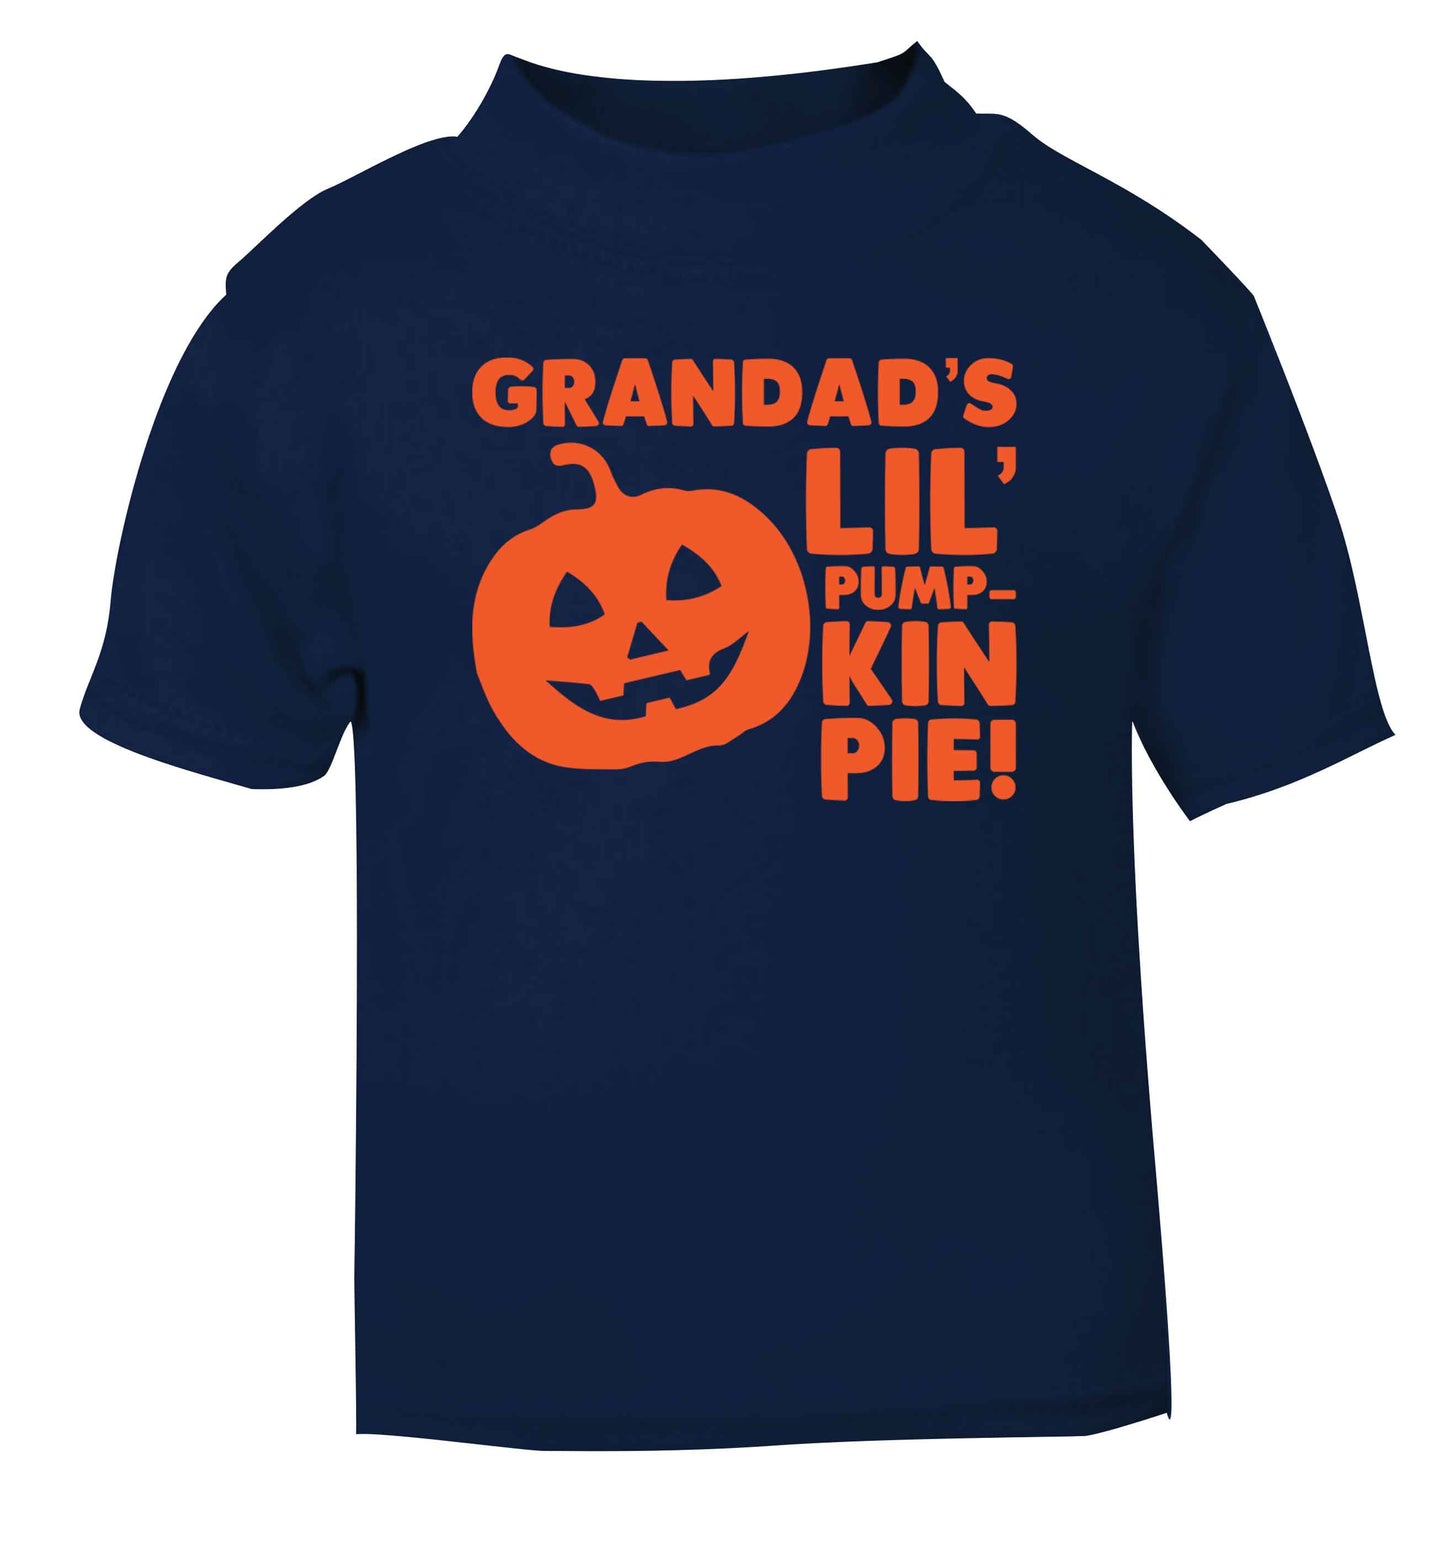 Grandad's lil' pumpkin pie navy baby toddler Tshirt 2 Years